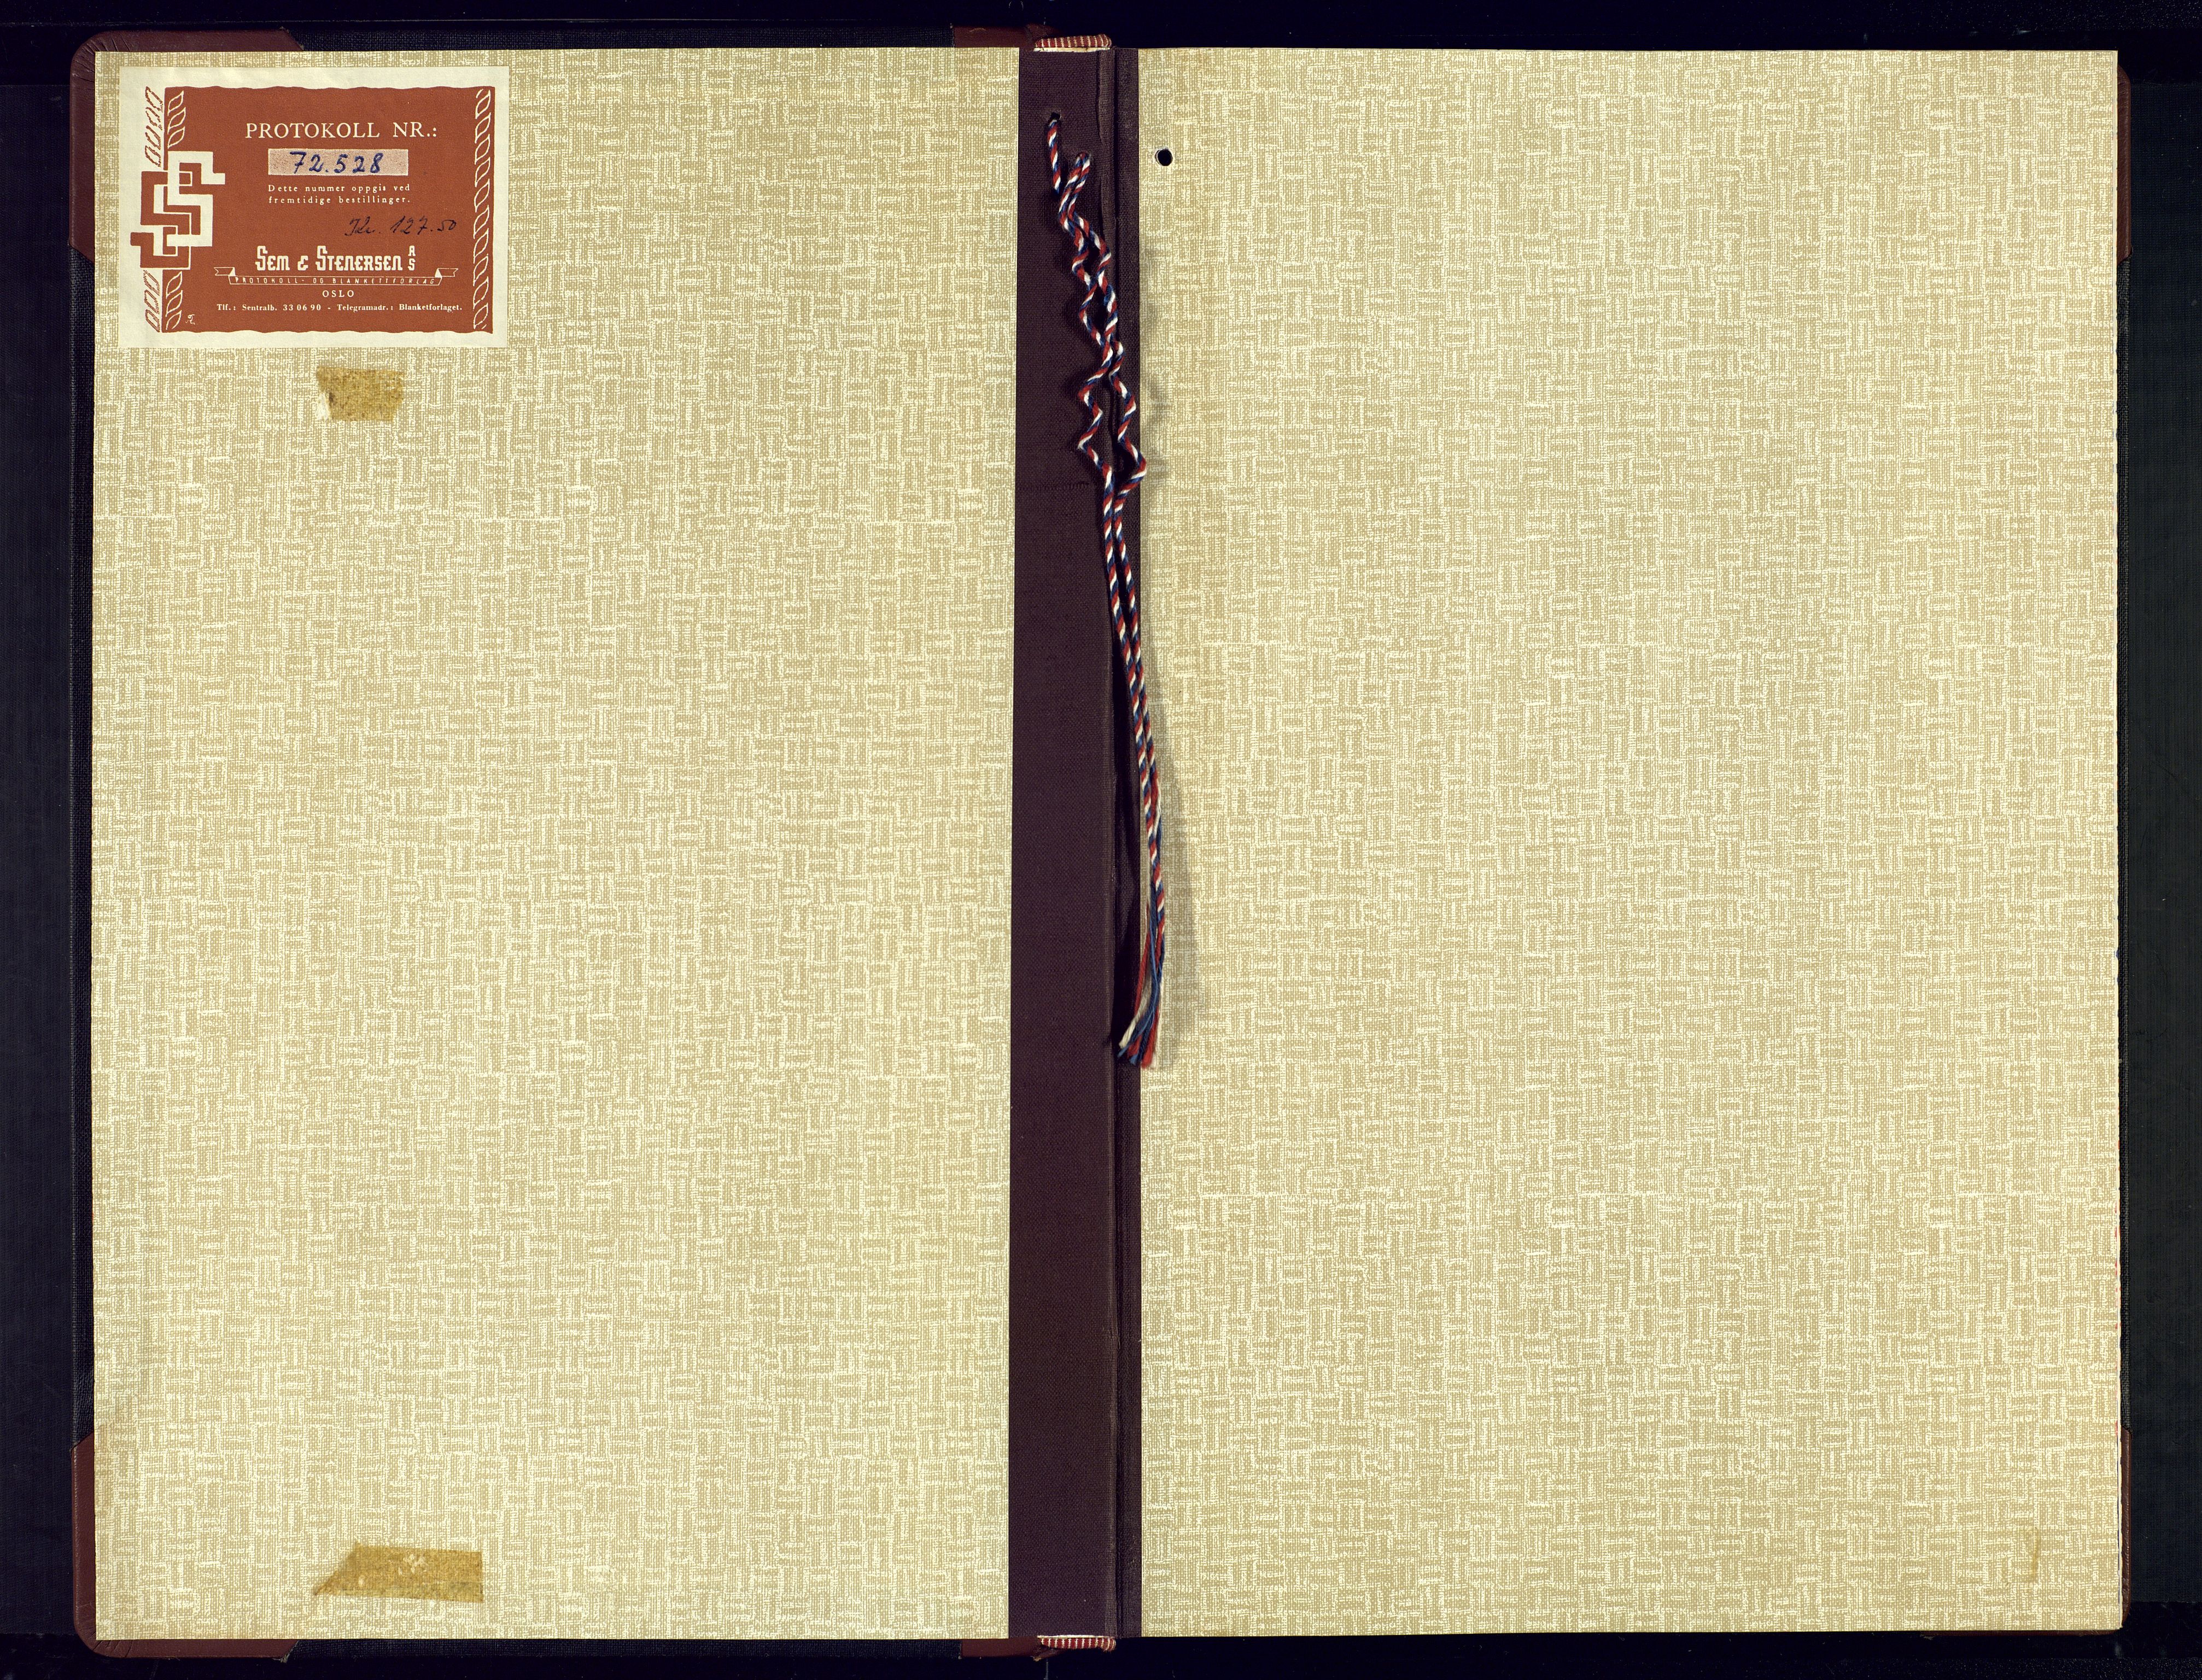 Arendal sokneprestkontor, Trefoldighet, SAK/1111-0040/F/Fb/L0012: Parish register (copy) no. B-12, 1961-1968